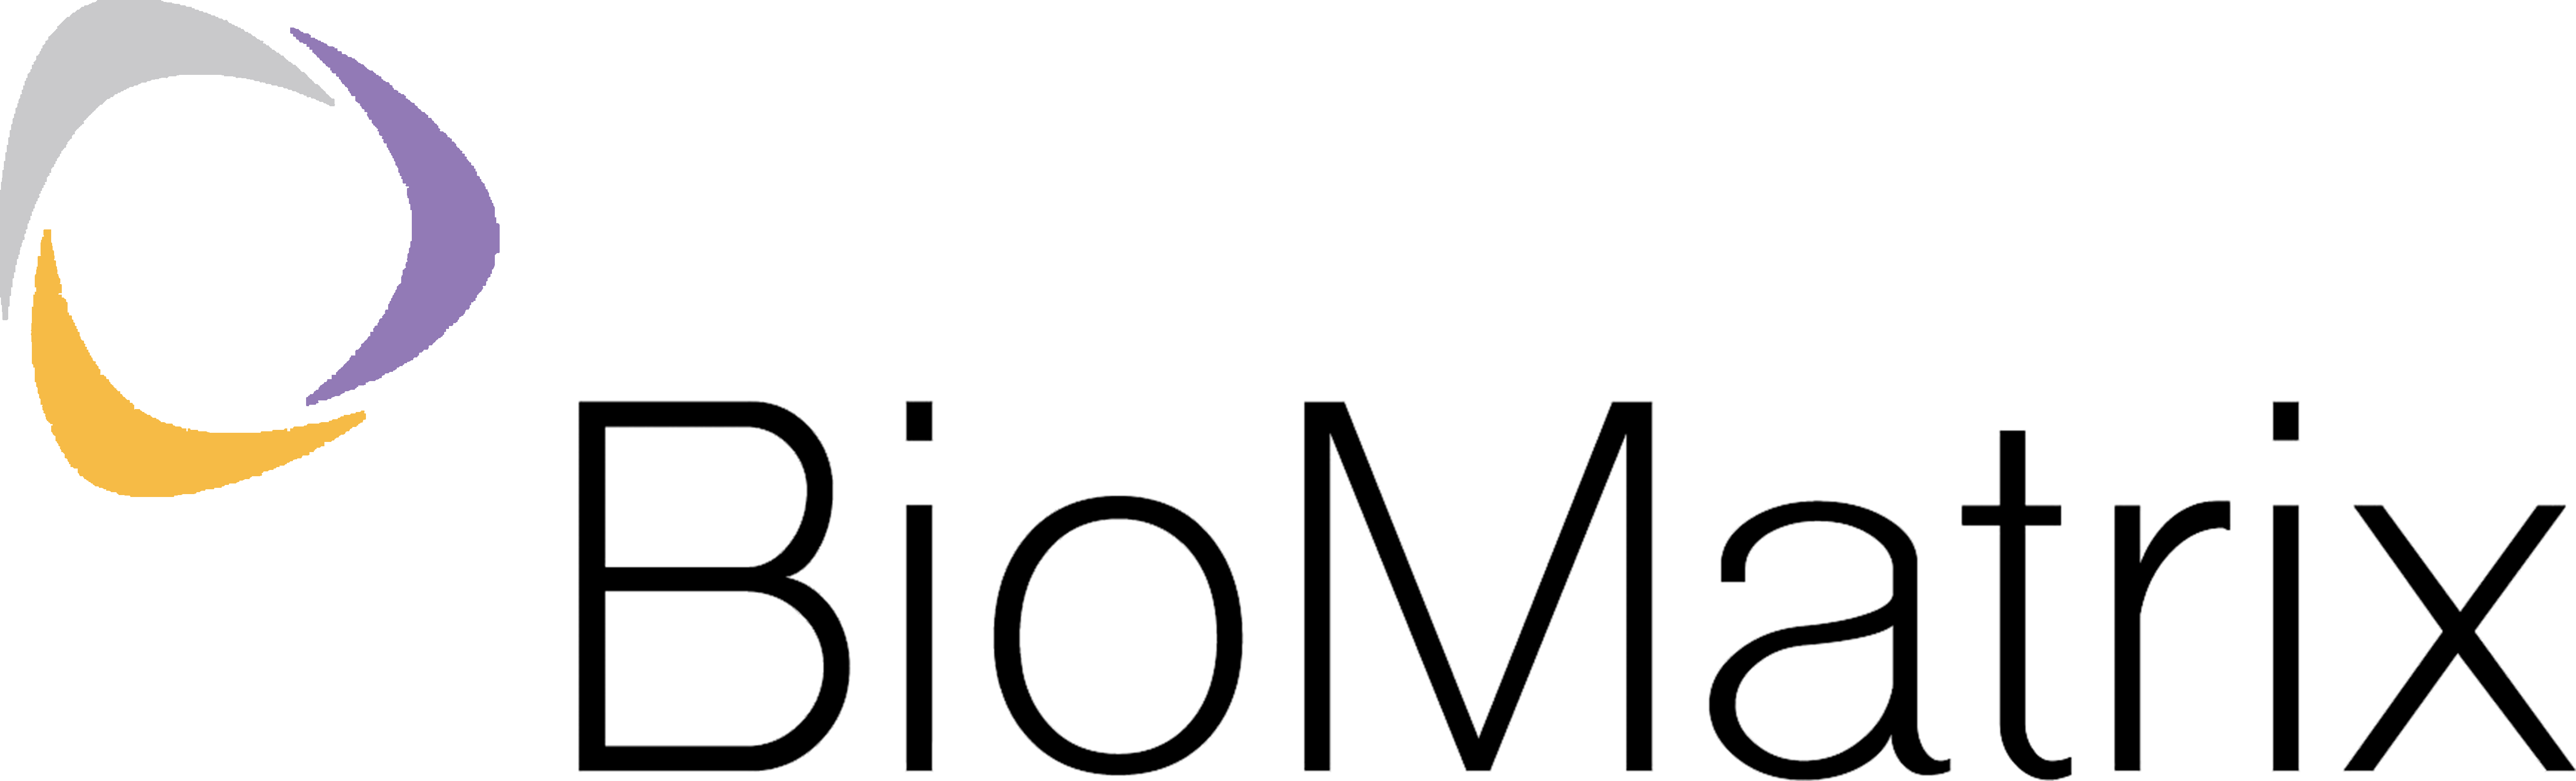 biomatrix-logo